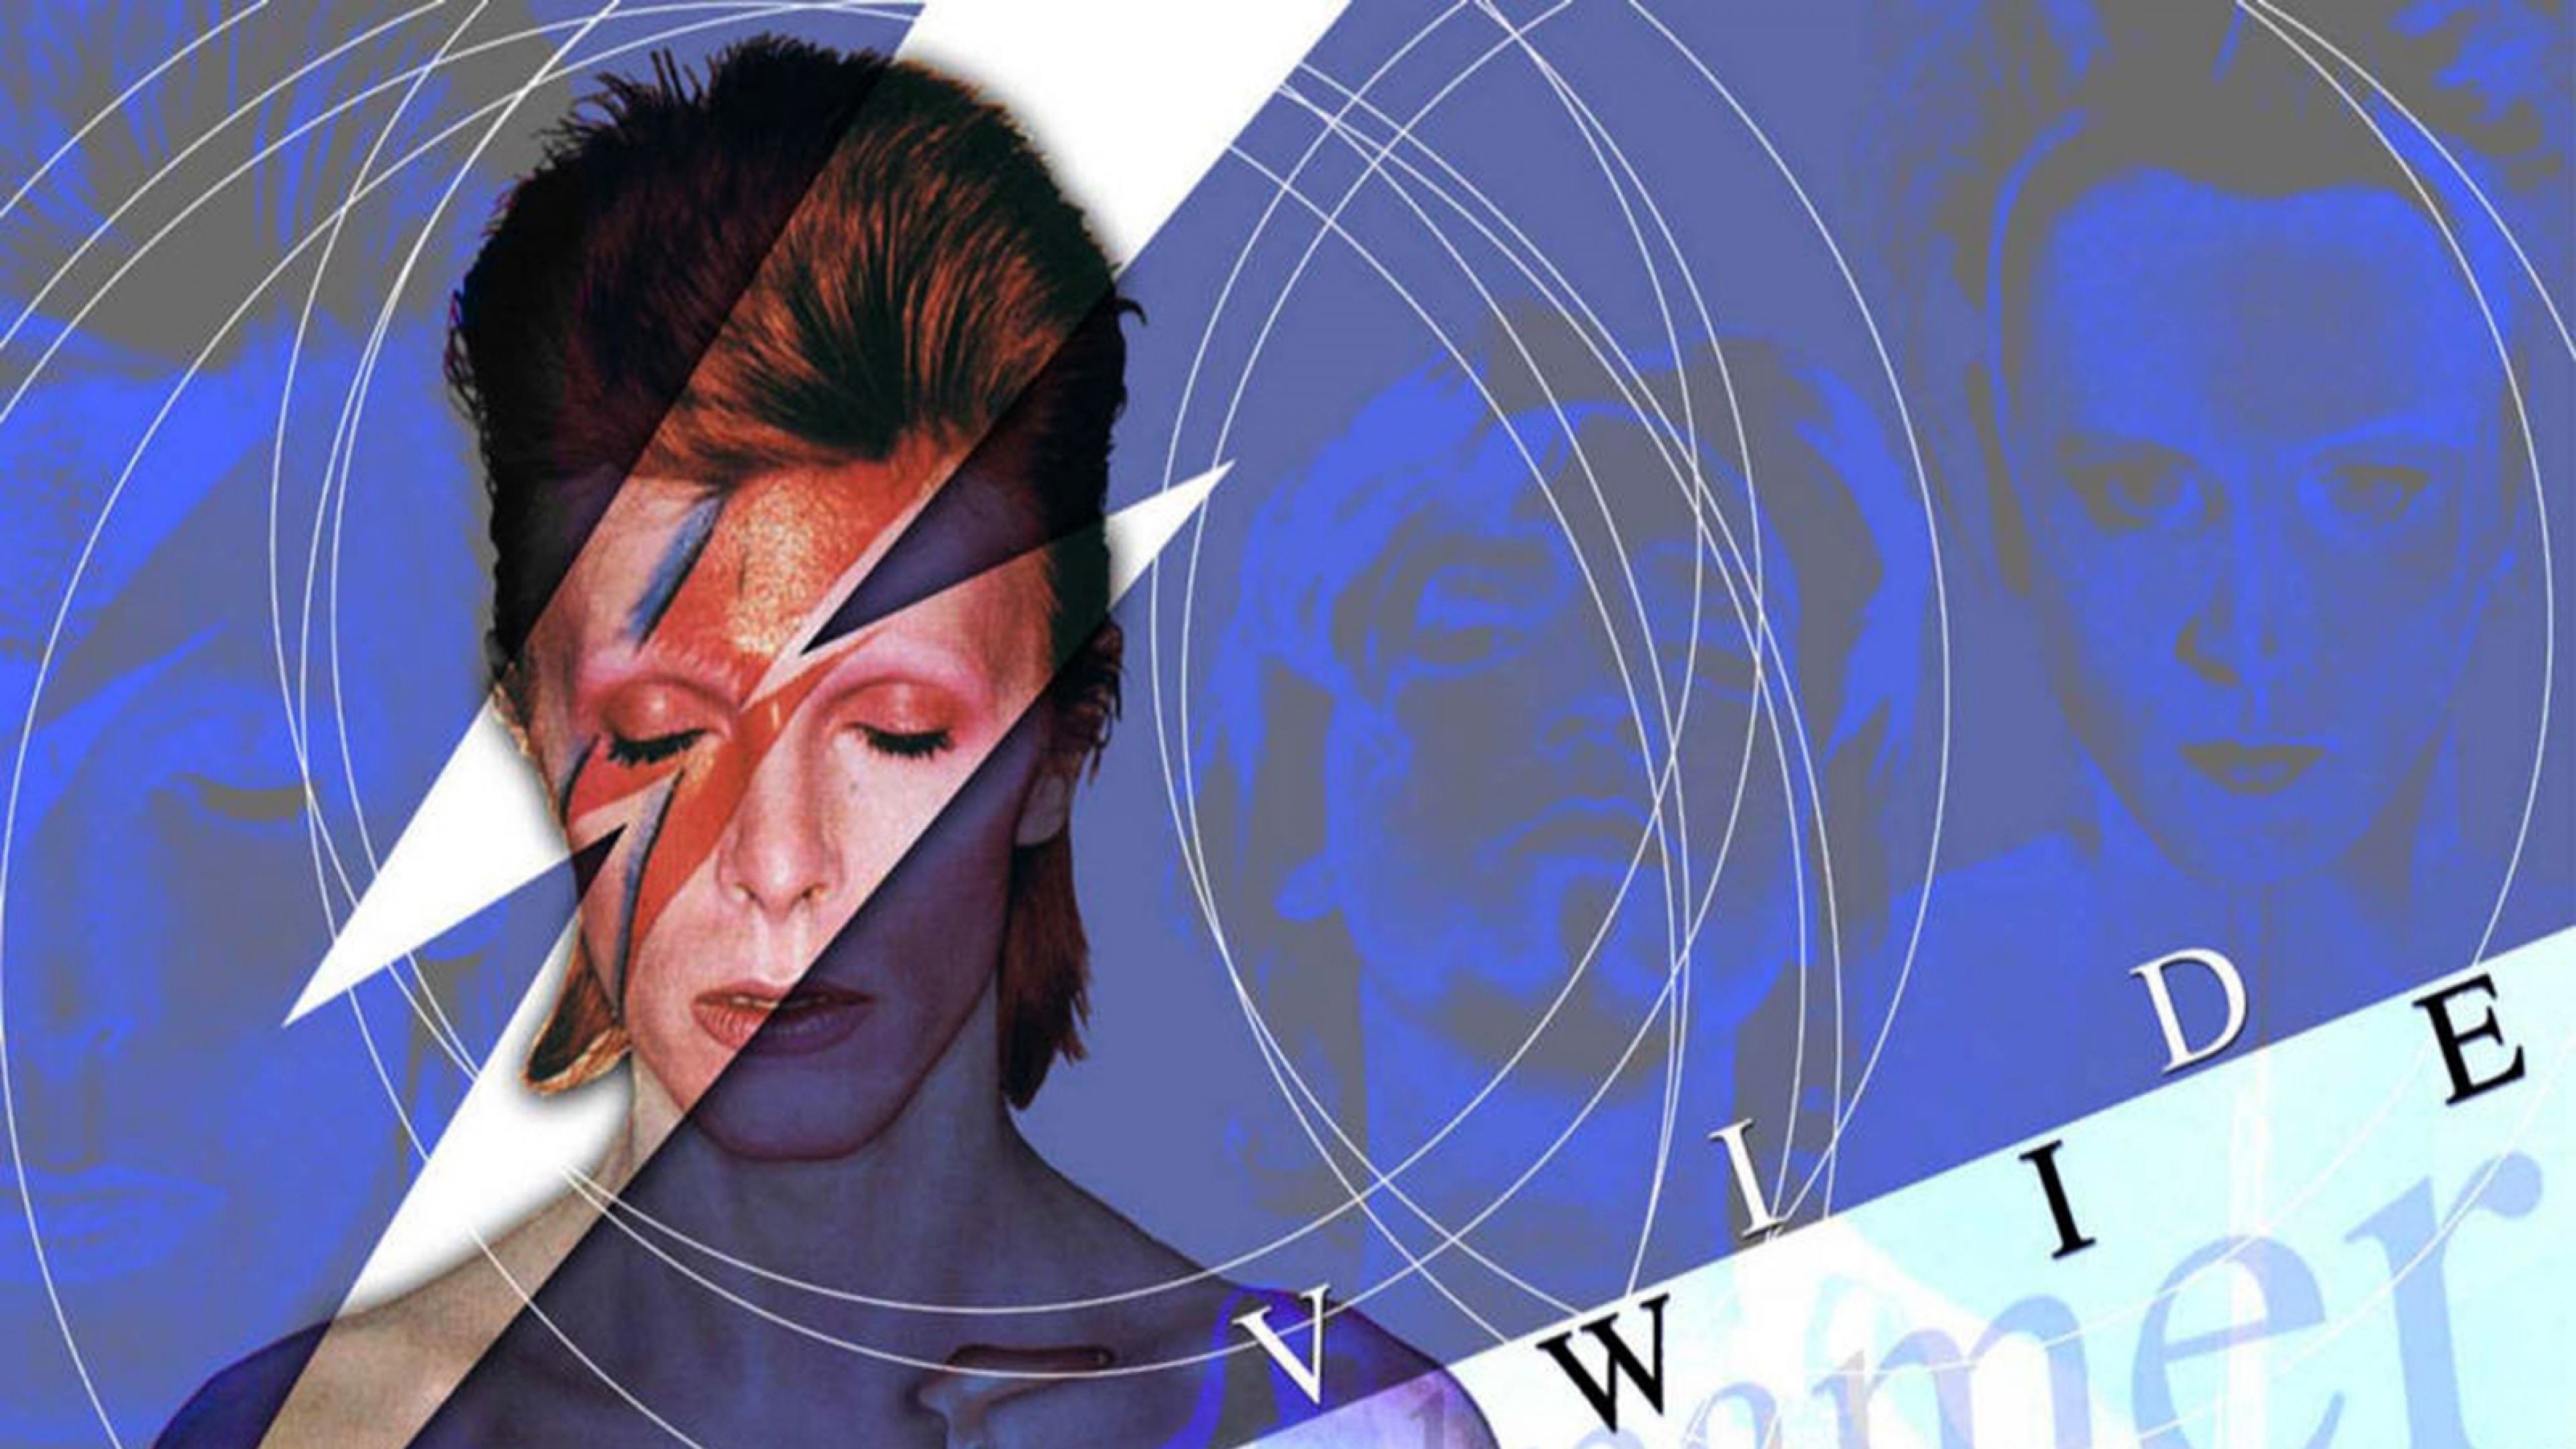 David Bowie Wallpaper for Desktop